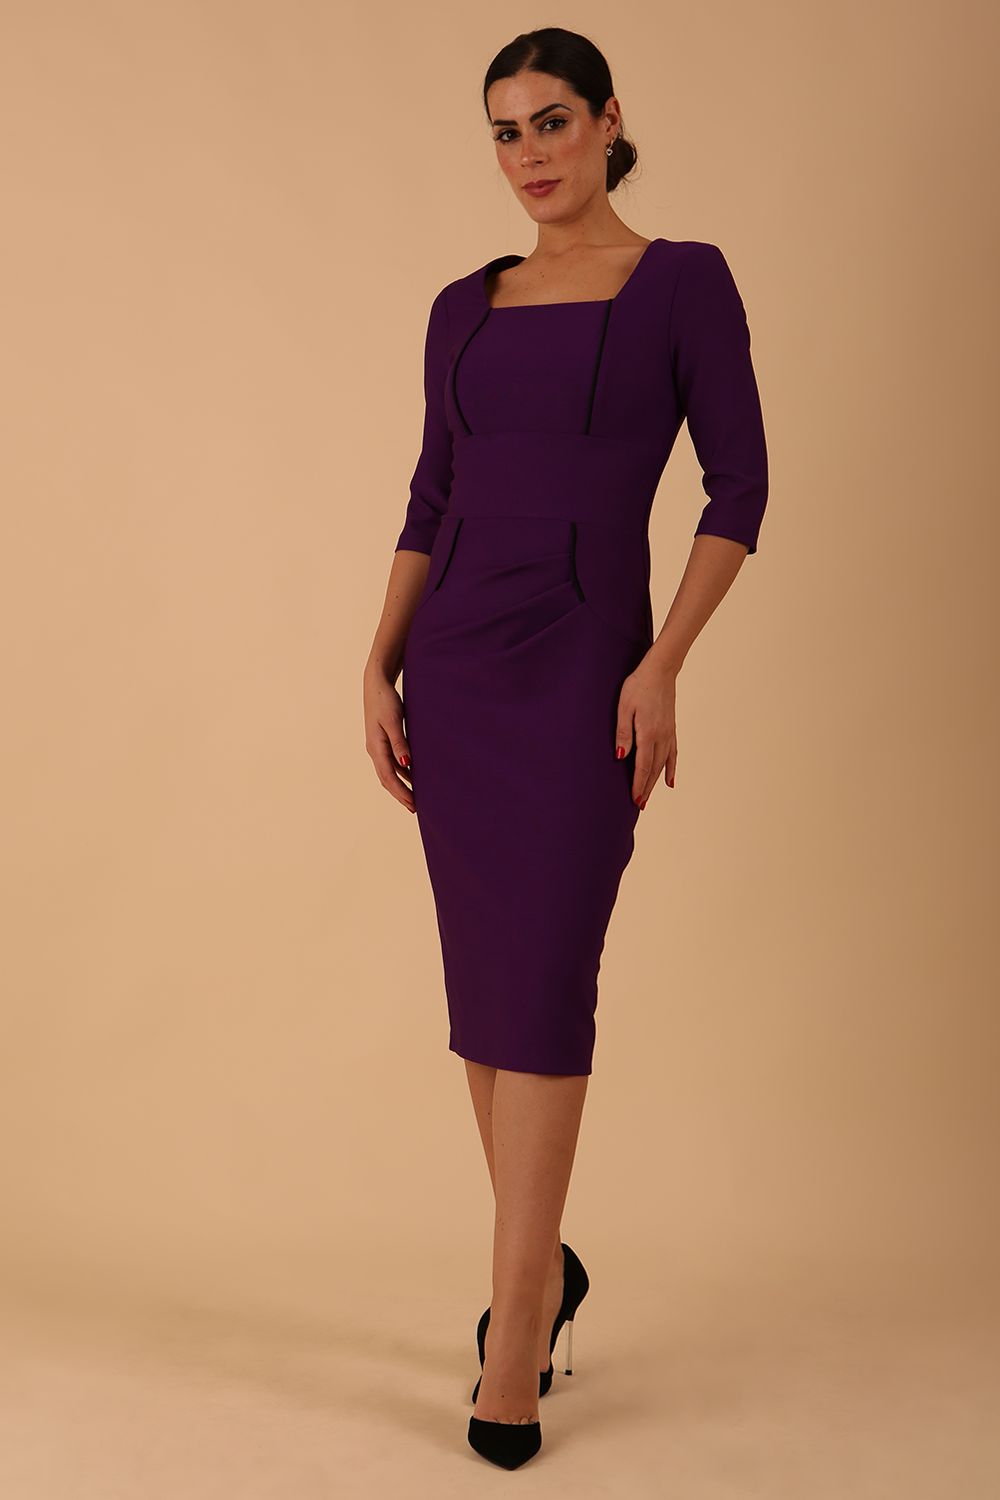 Model wearing diva catwalk Seed Divine Dress 3/4 sleeved knee length in imperial purple colour